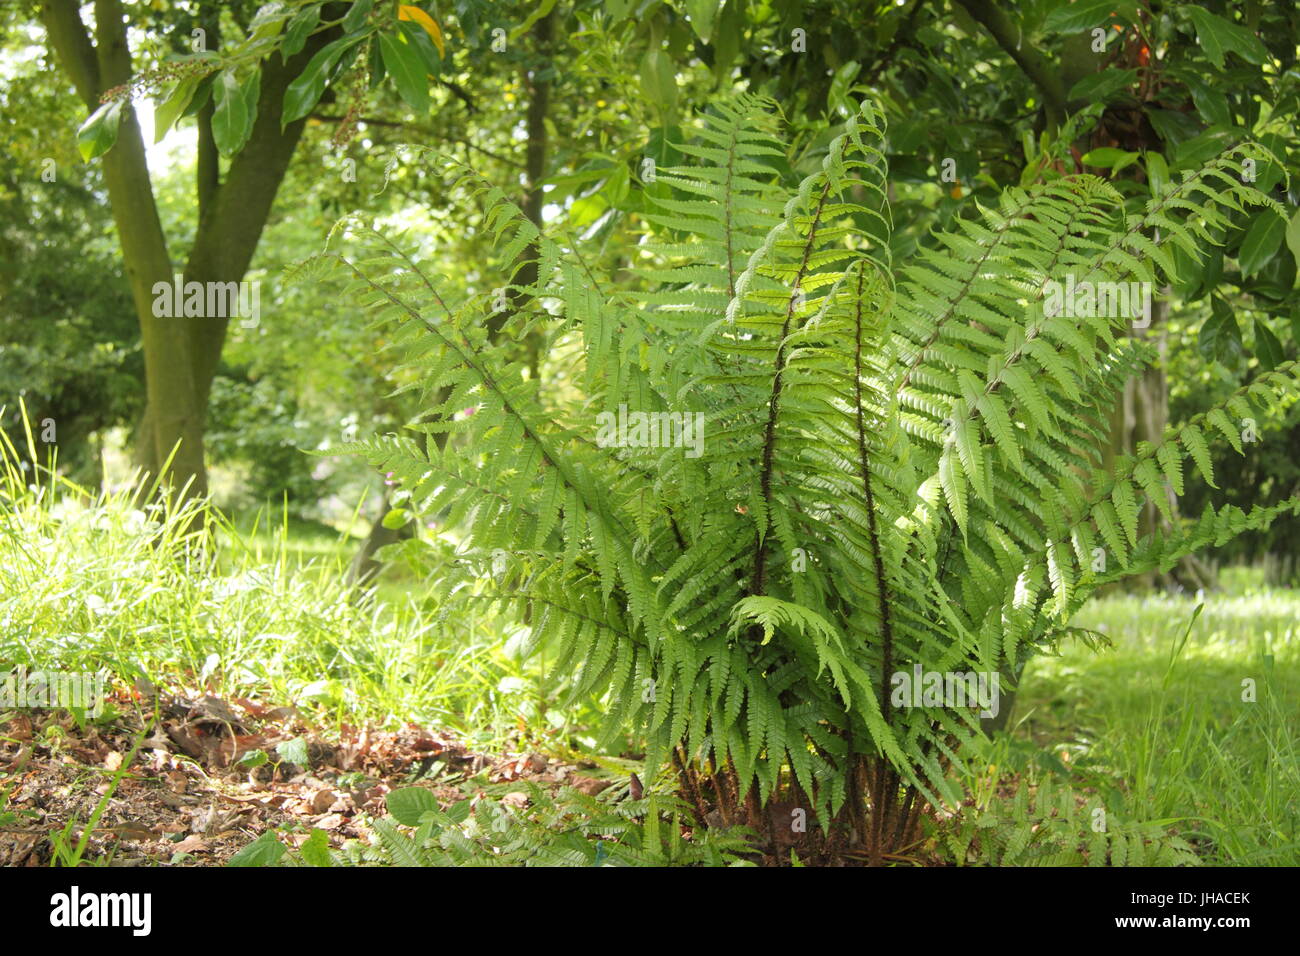 Dryopteris 'Wallichana' fern growing the the light woodland area of an English garden,England, UK Stock Photo